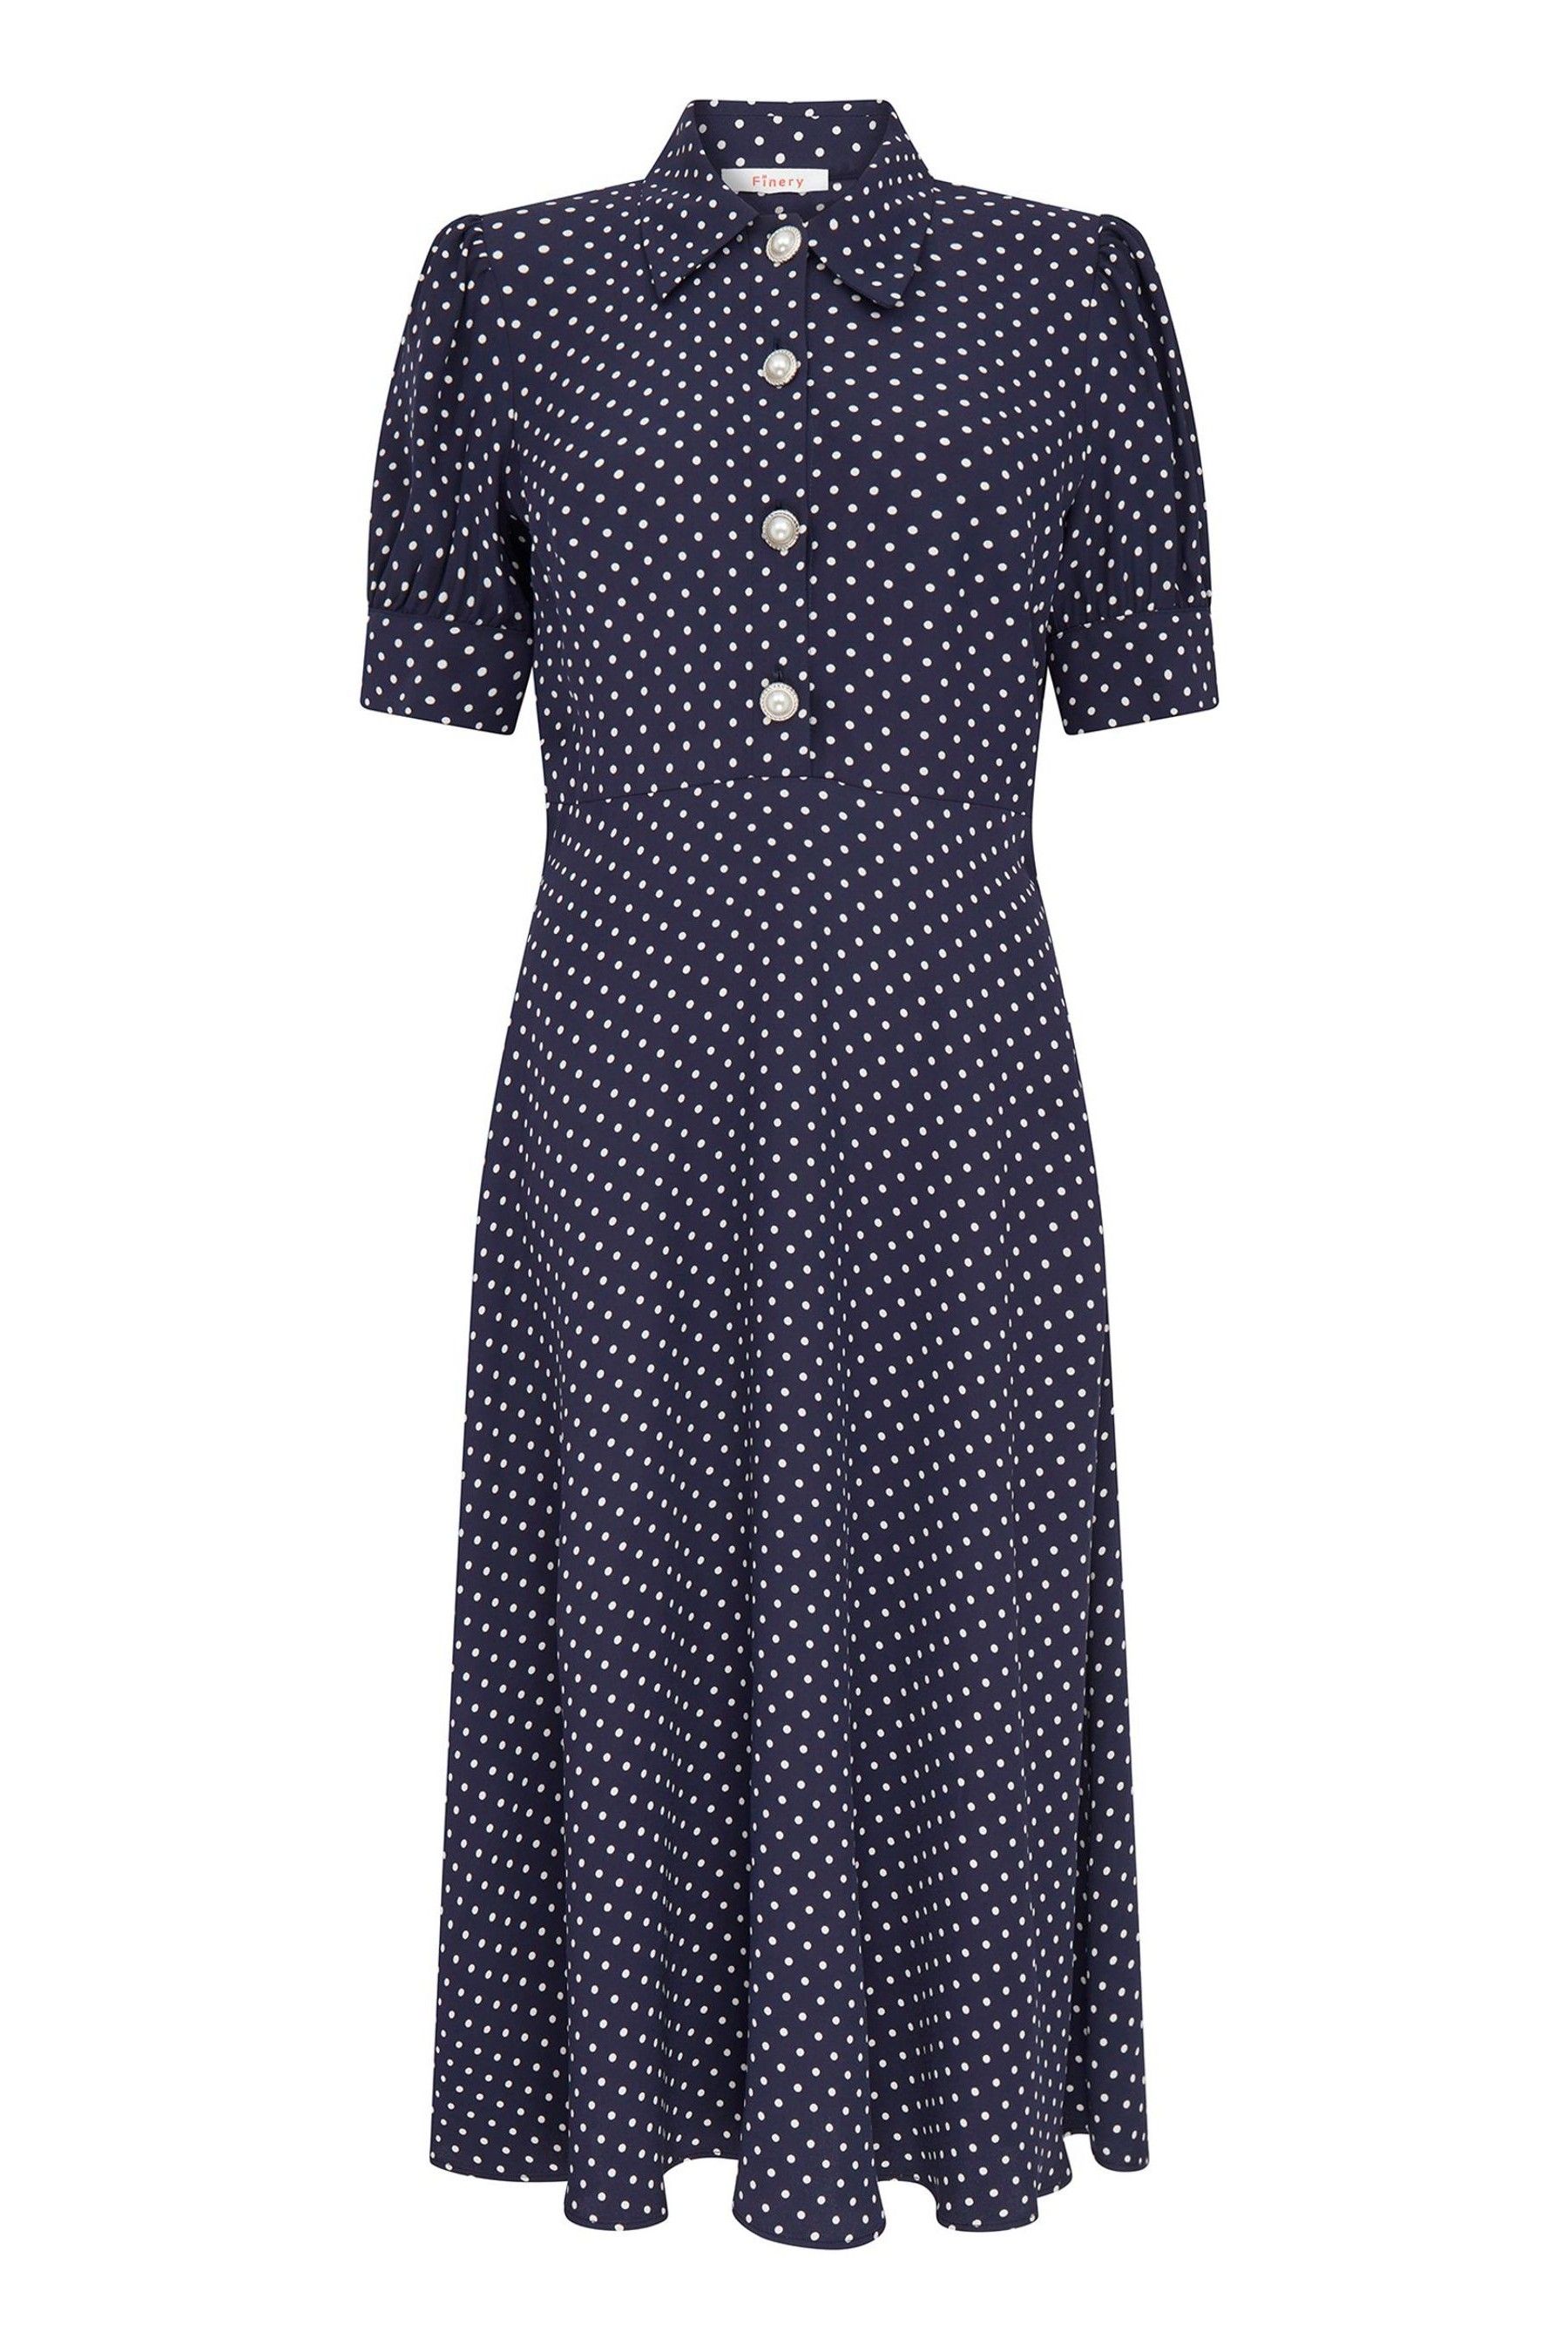 Buy Finery Jaela Satin Back Crepe Navy Spot Dress from the Next UK ...